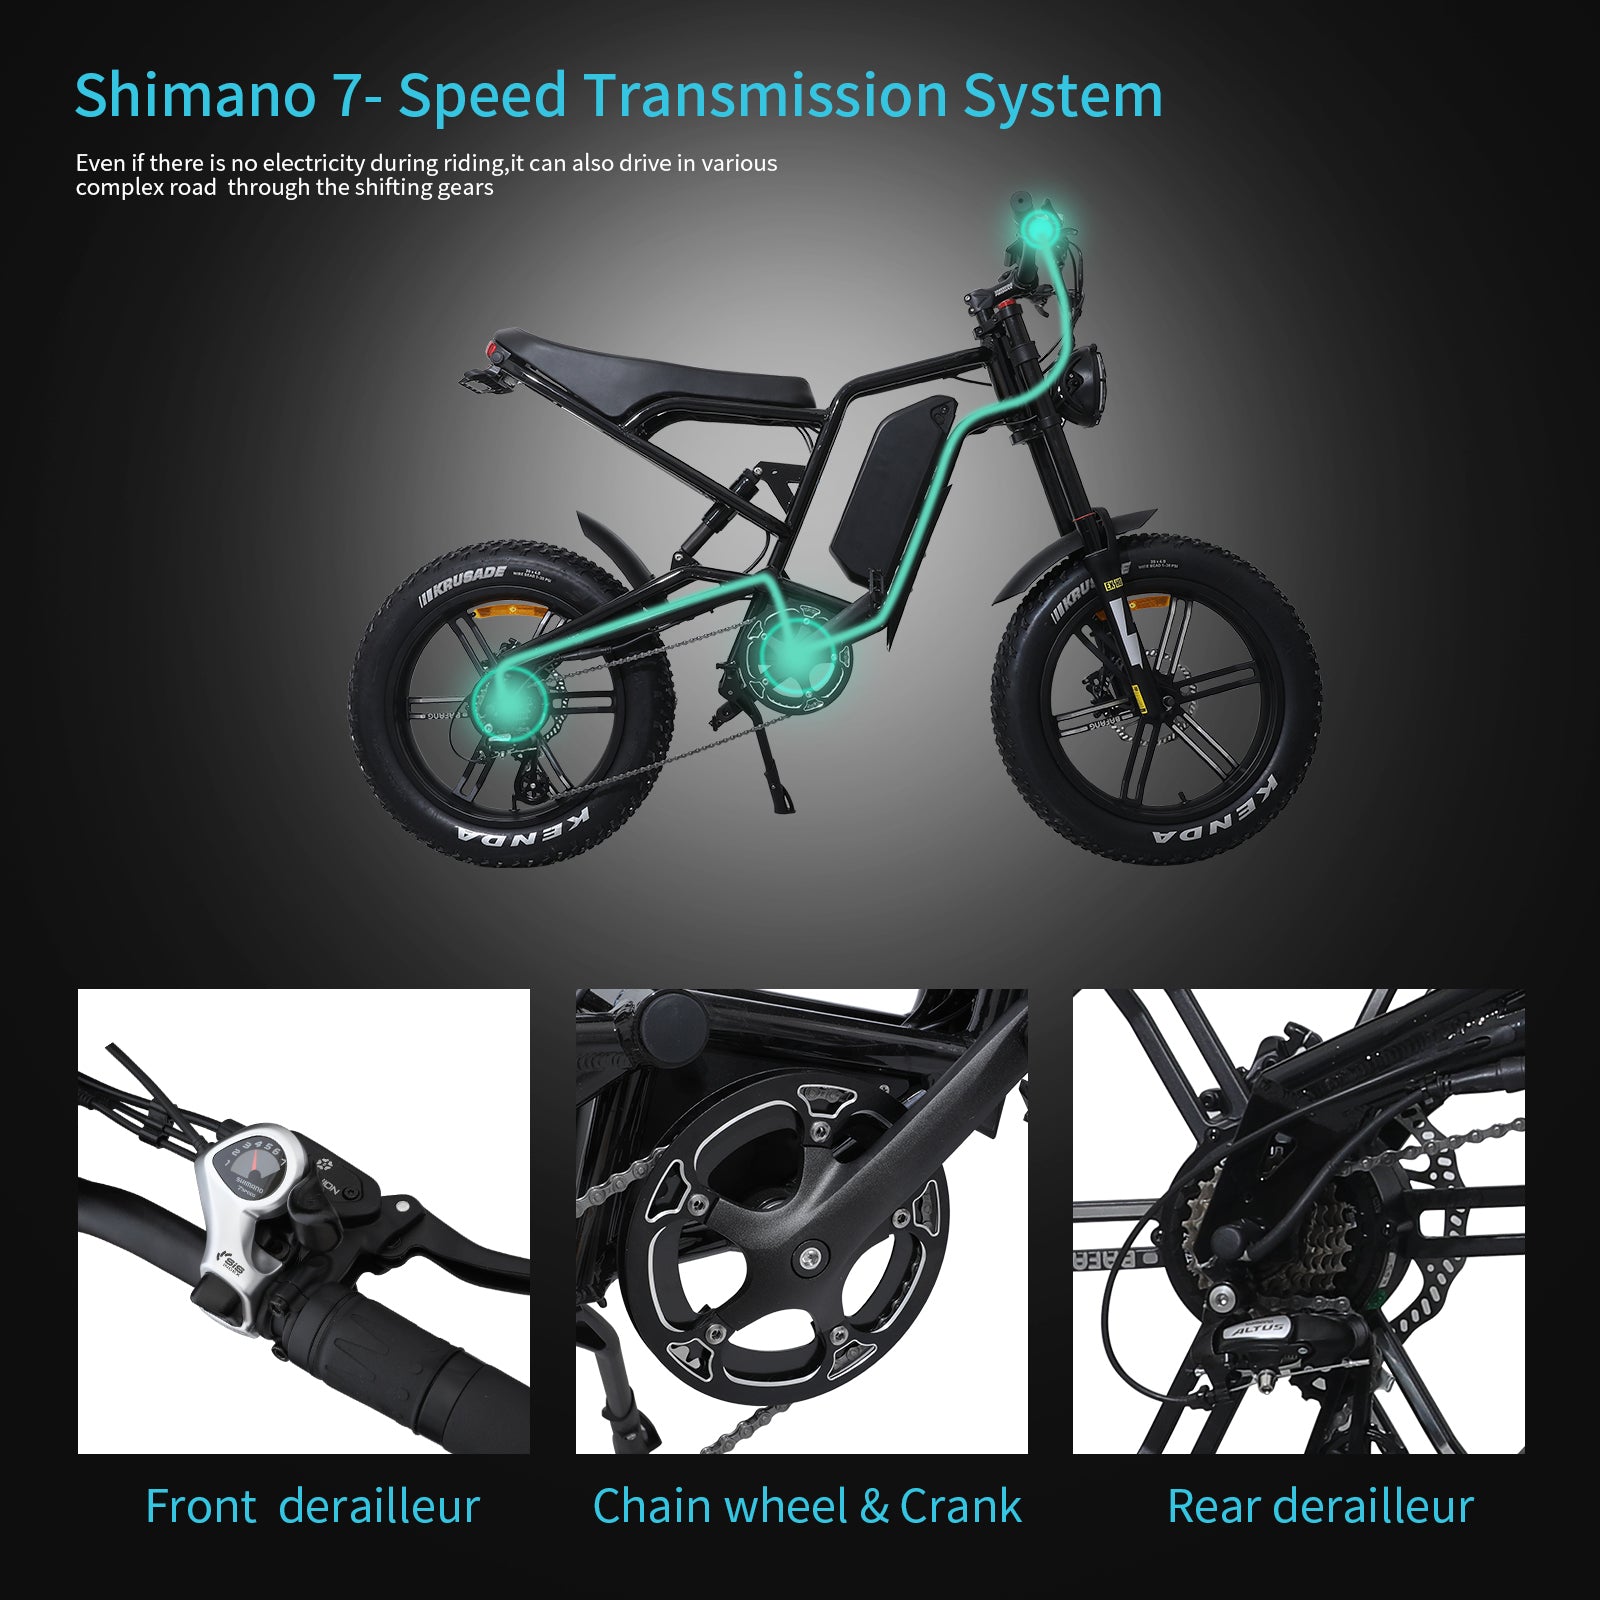 Ridefaboard, bicicleta eléctrica de tierra de 20 pulgadas, batería de litio de 48v, neumático ancho de largo alcance, bicicleta eléctrica de velocidad Variable